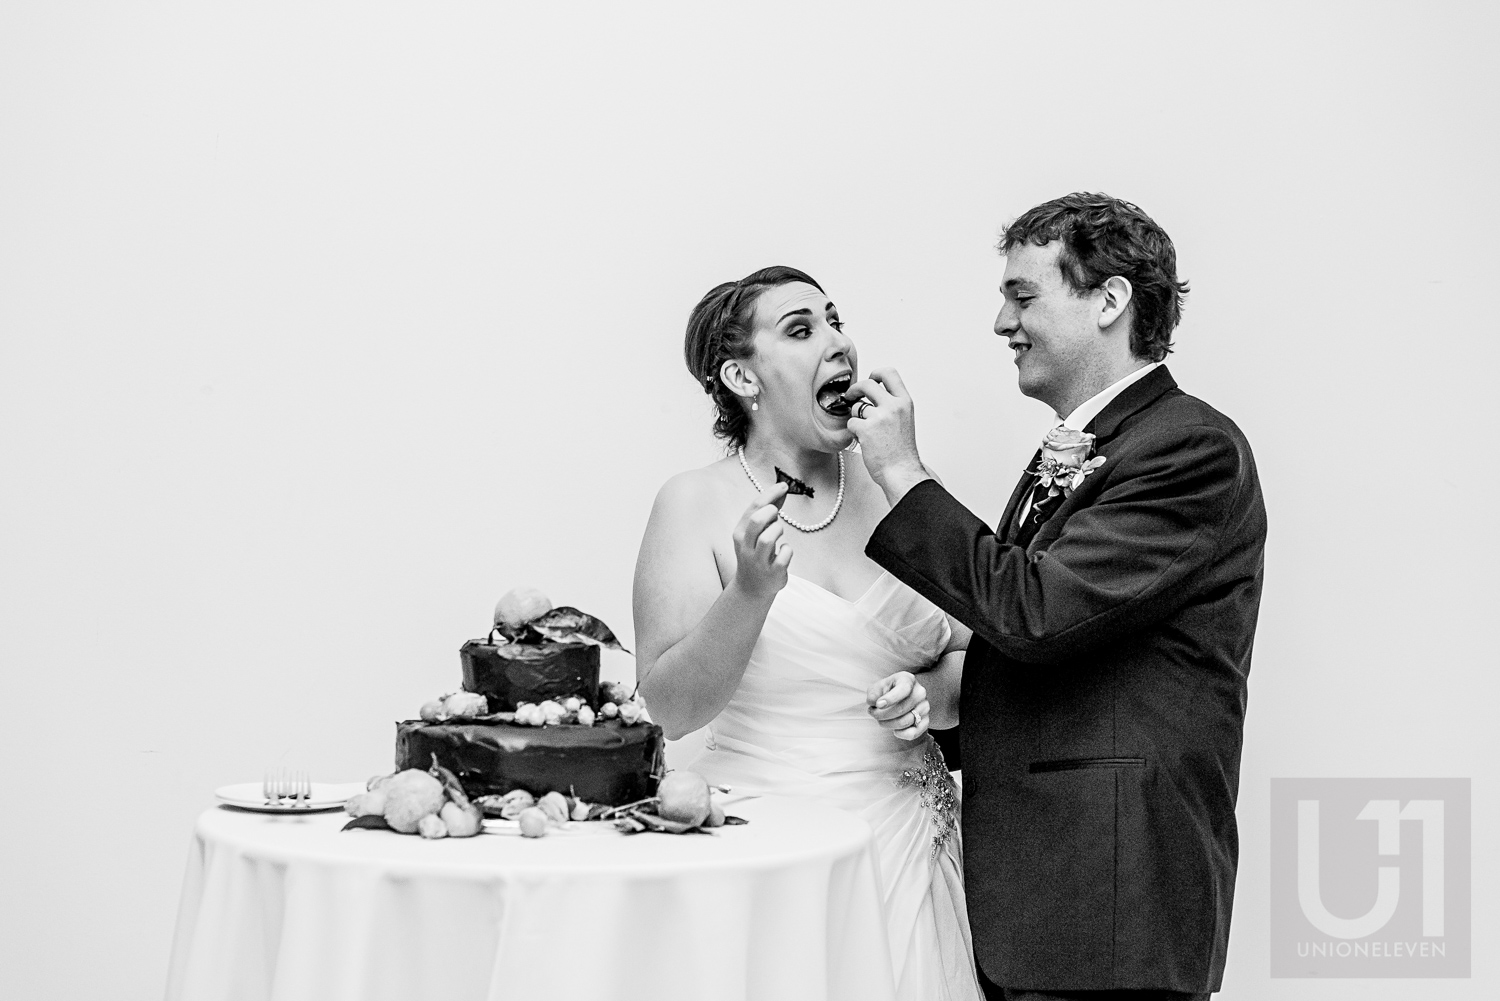 The groom feeding wedding cake to the bride at their wedding reception